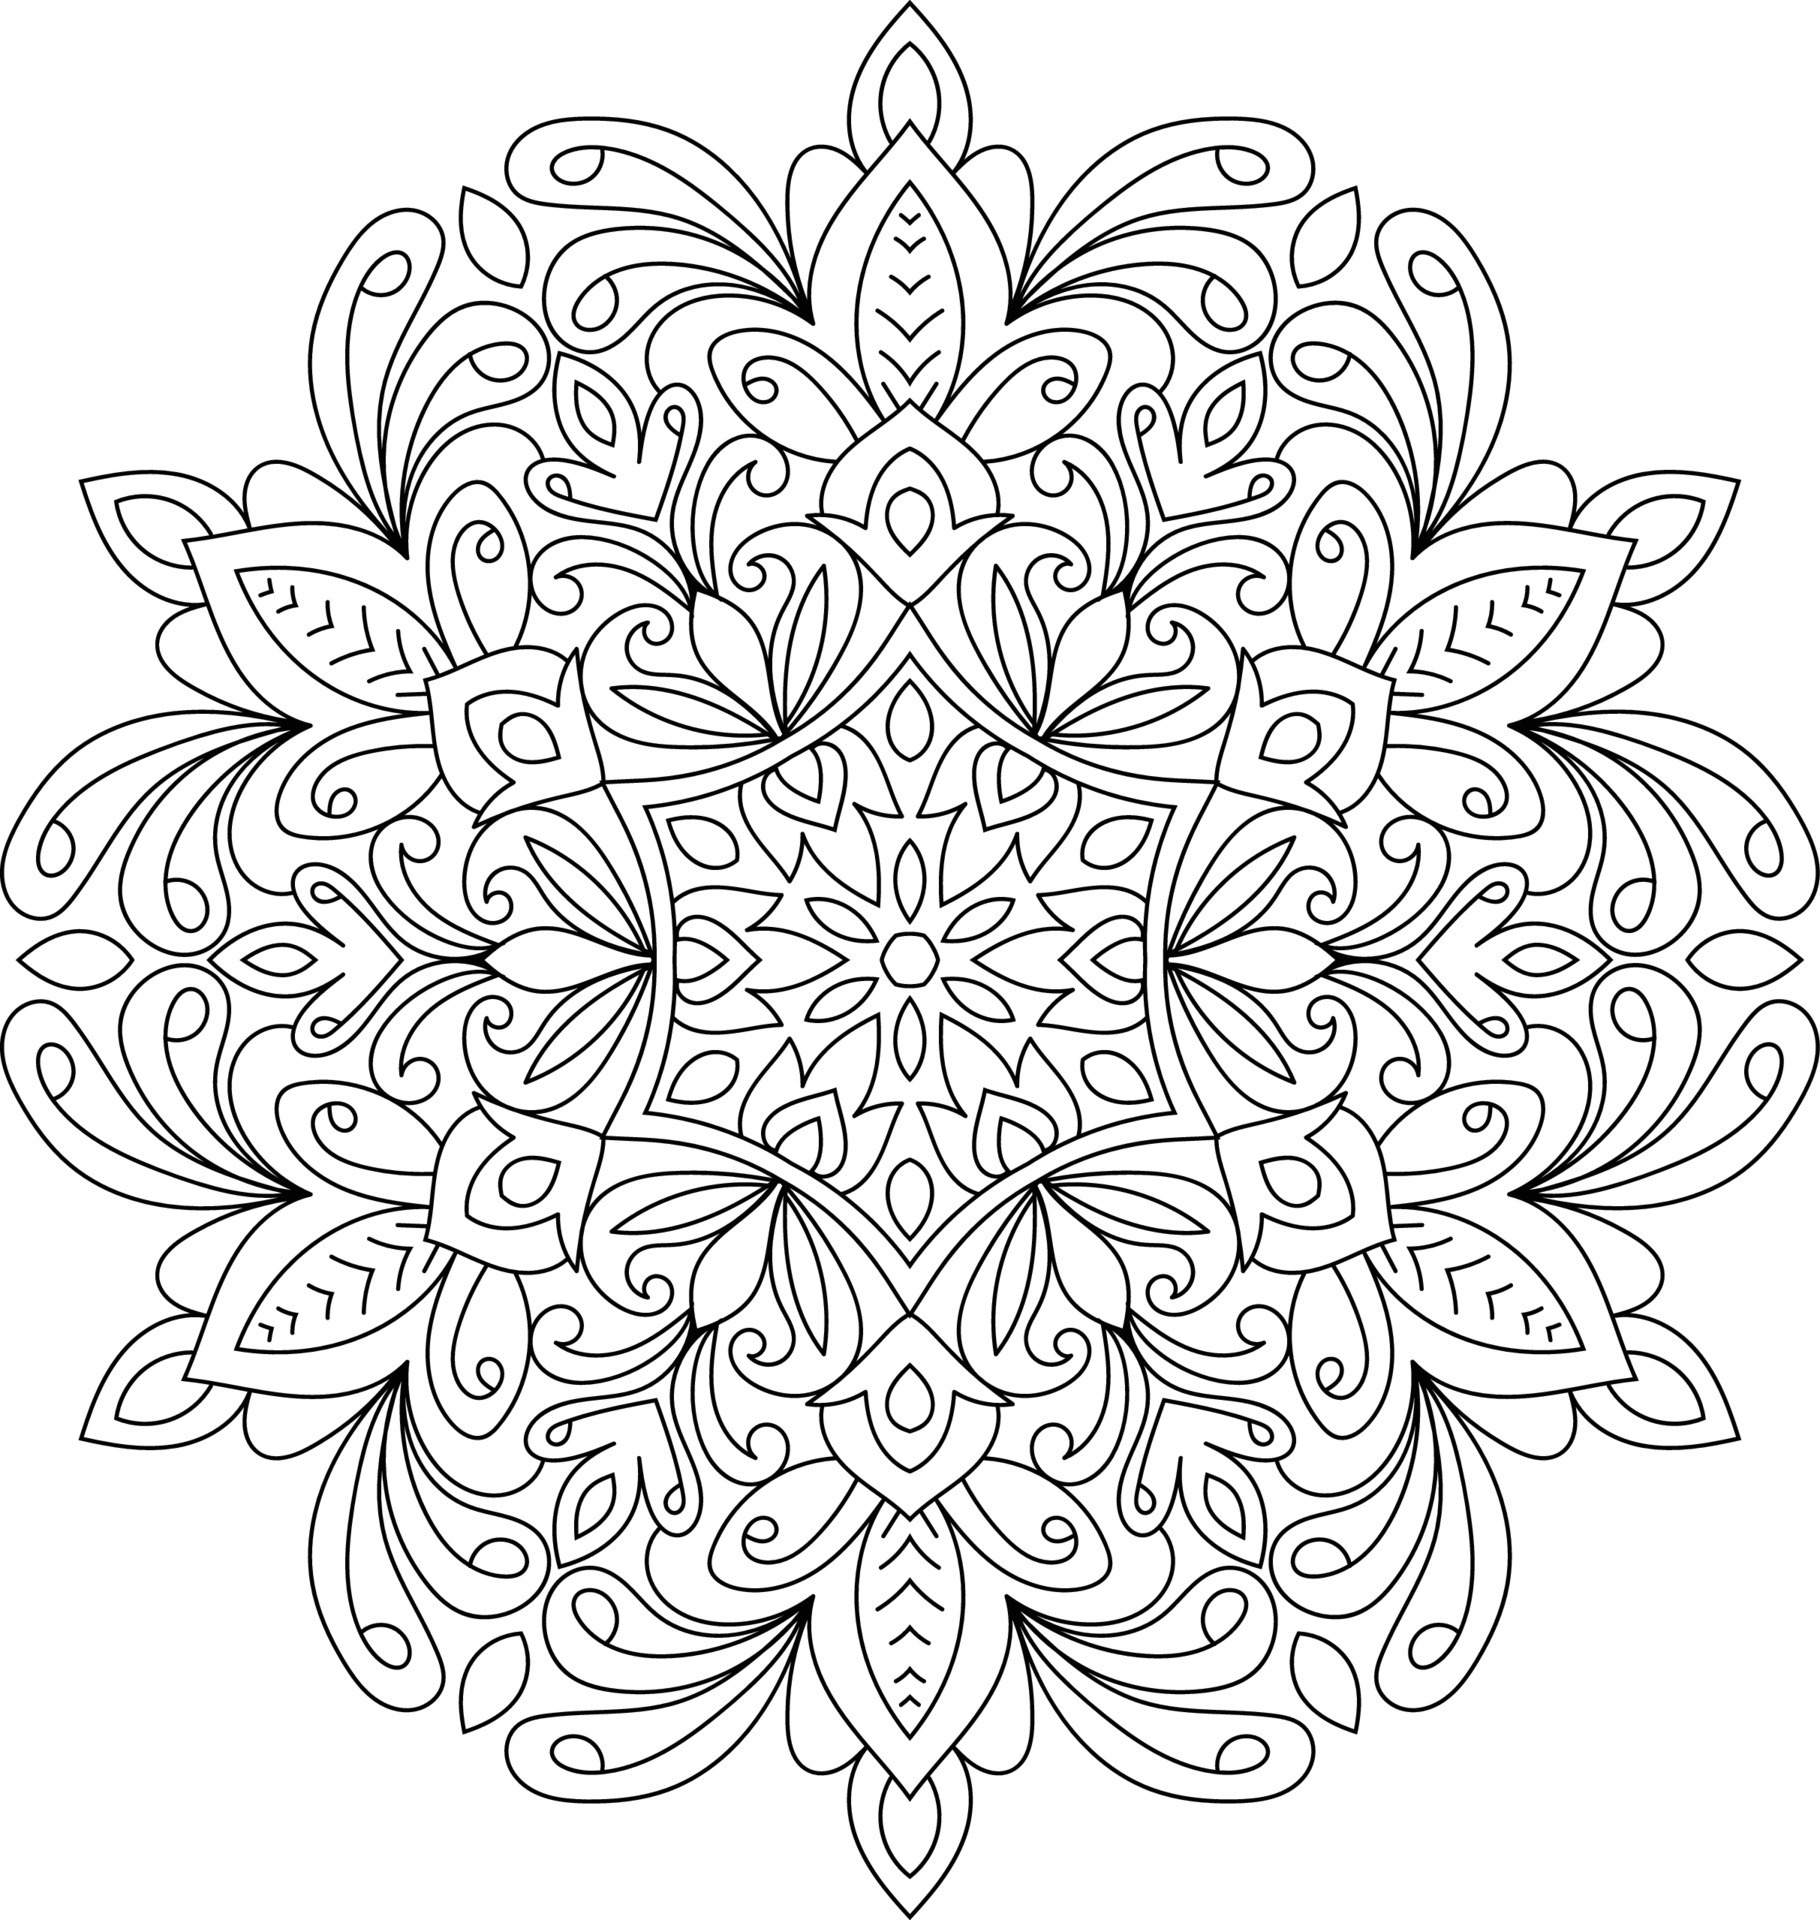 Decorative mandala design coloring book page illustration 13833885 ...